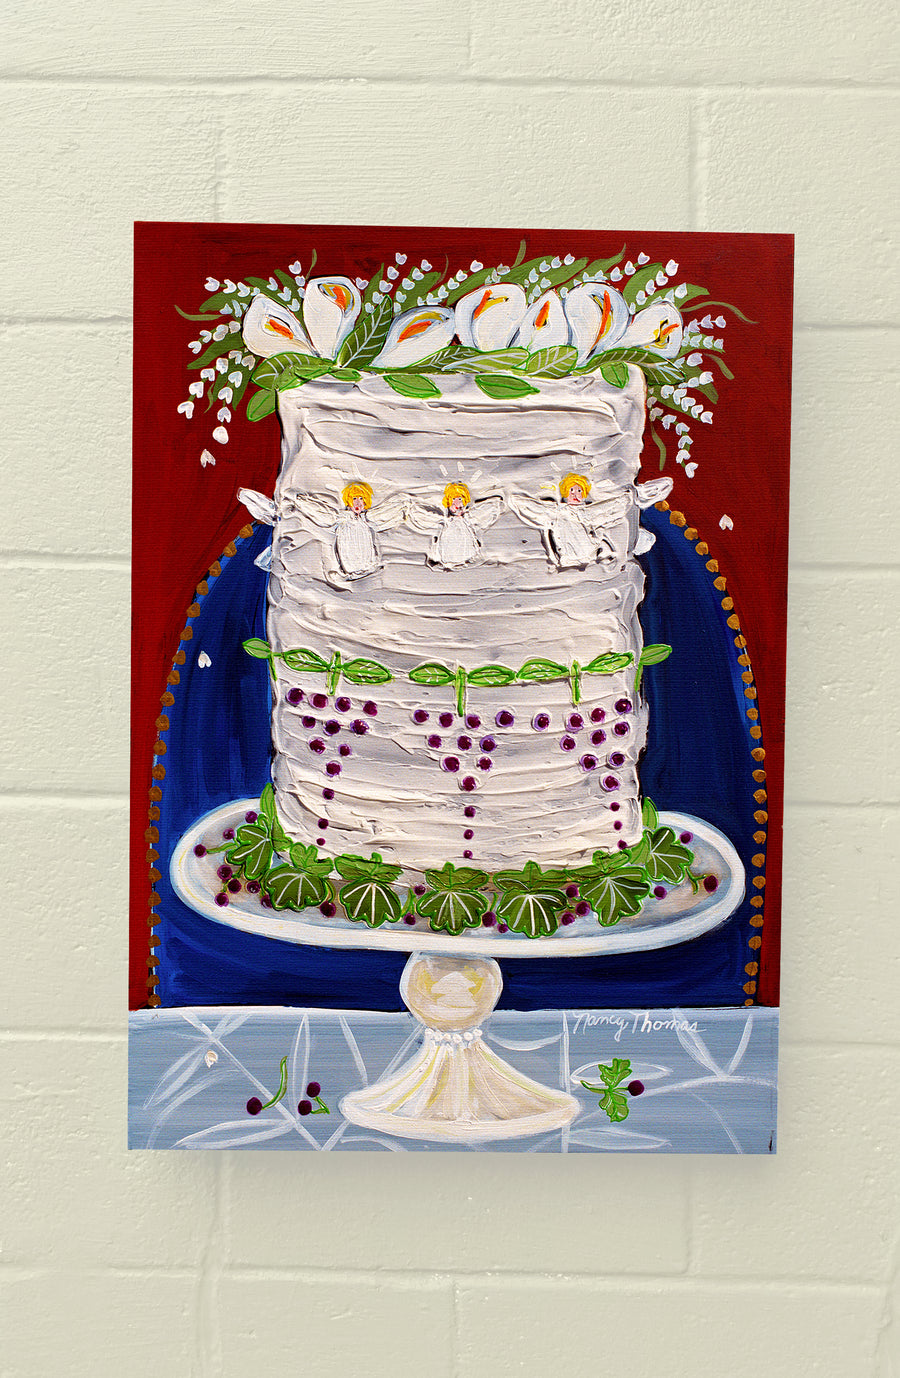 Gallery Grand - CAKE - Fruitcake